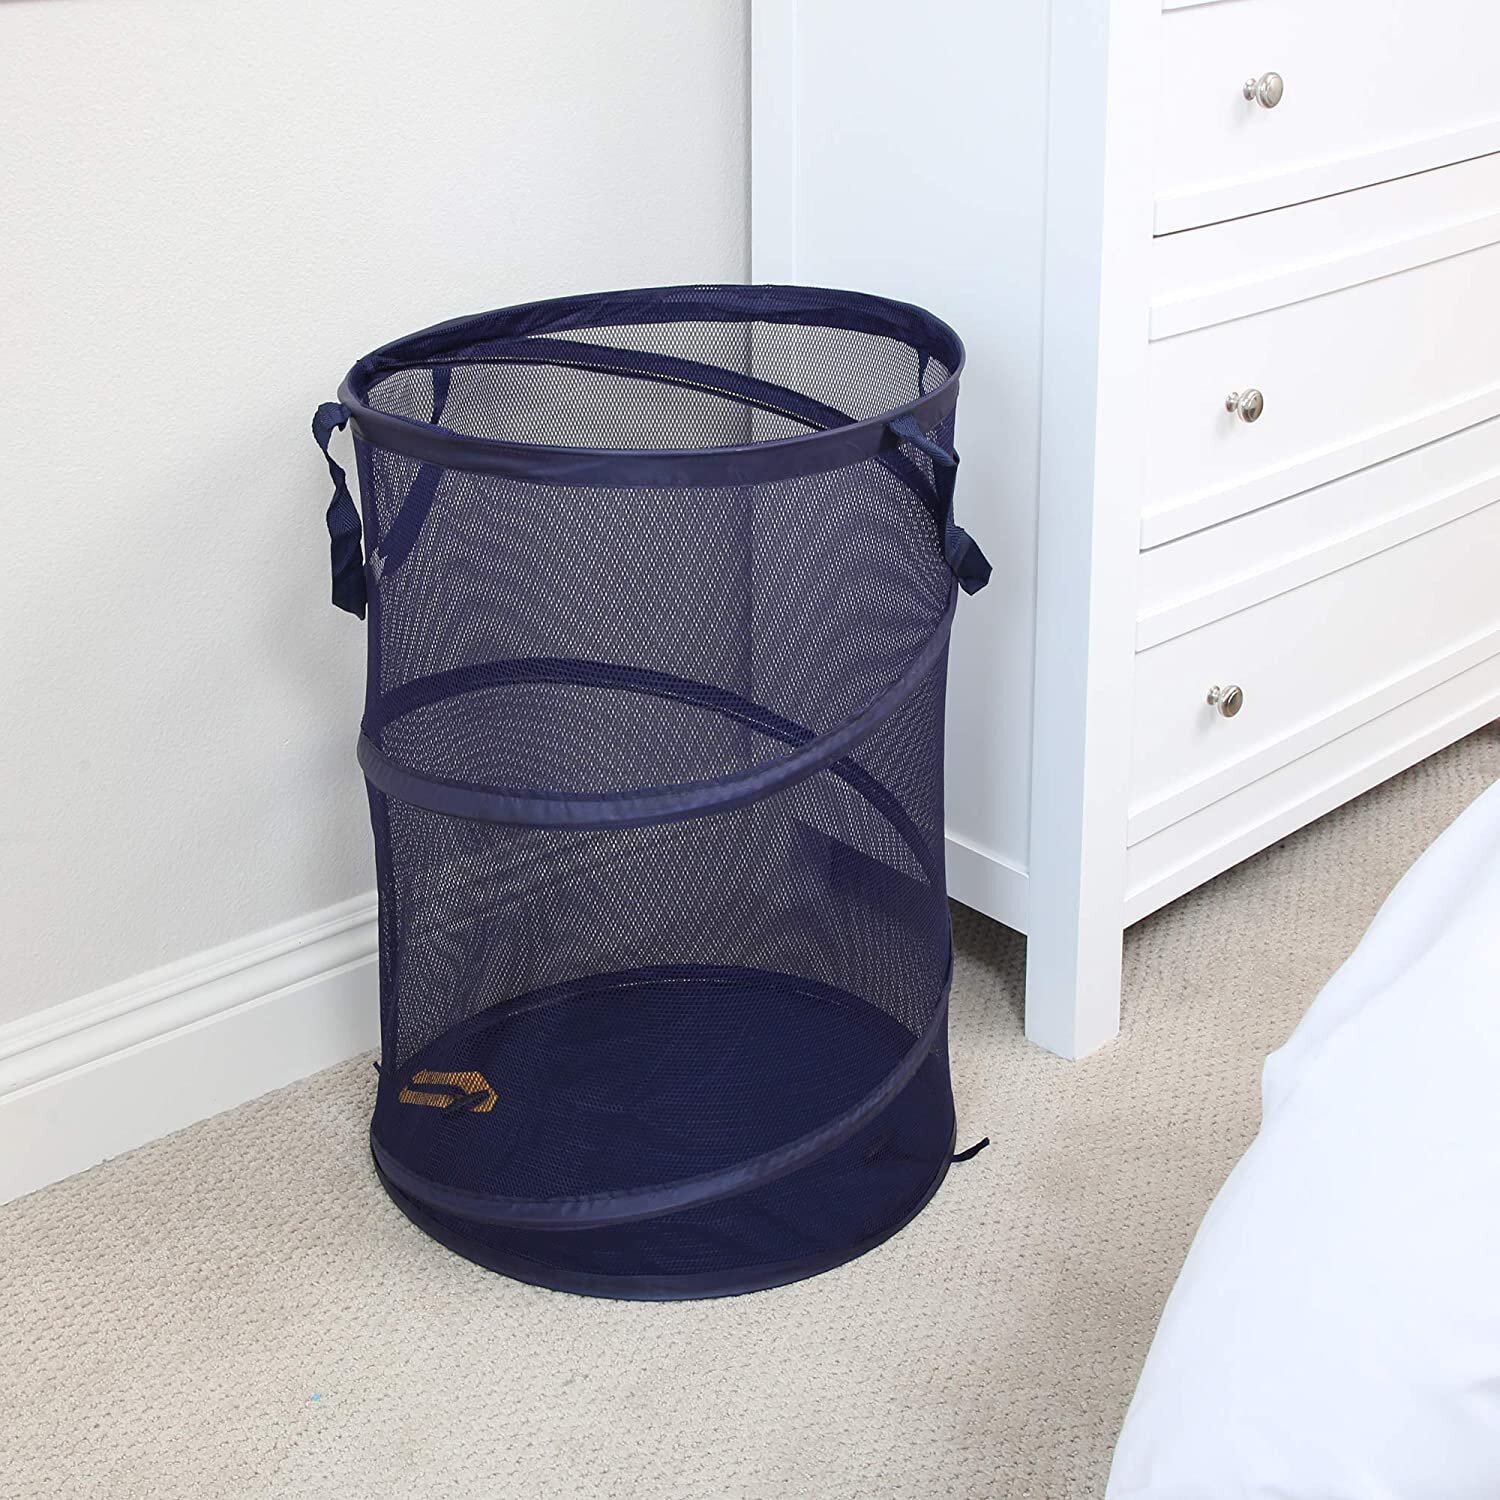 Rebrilliant Collapsible Laundry Basket & Reviews